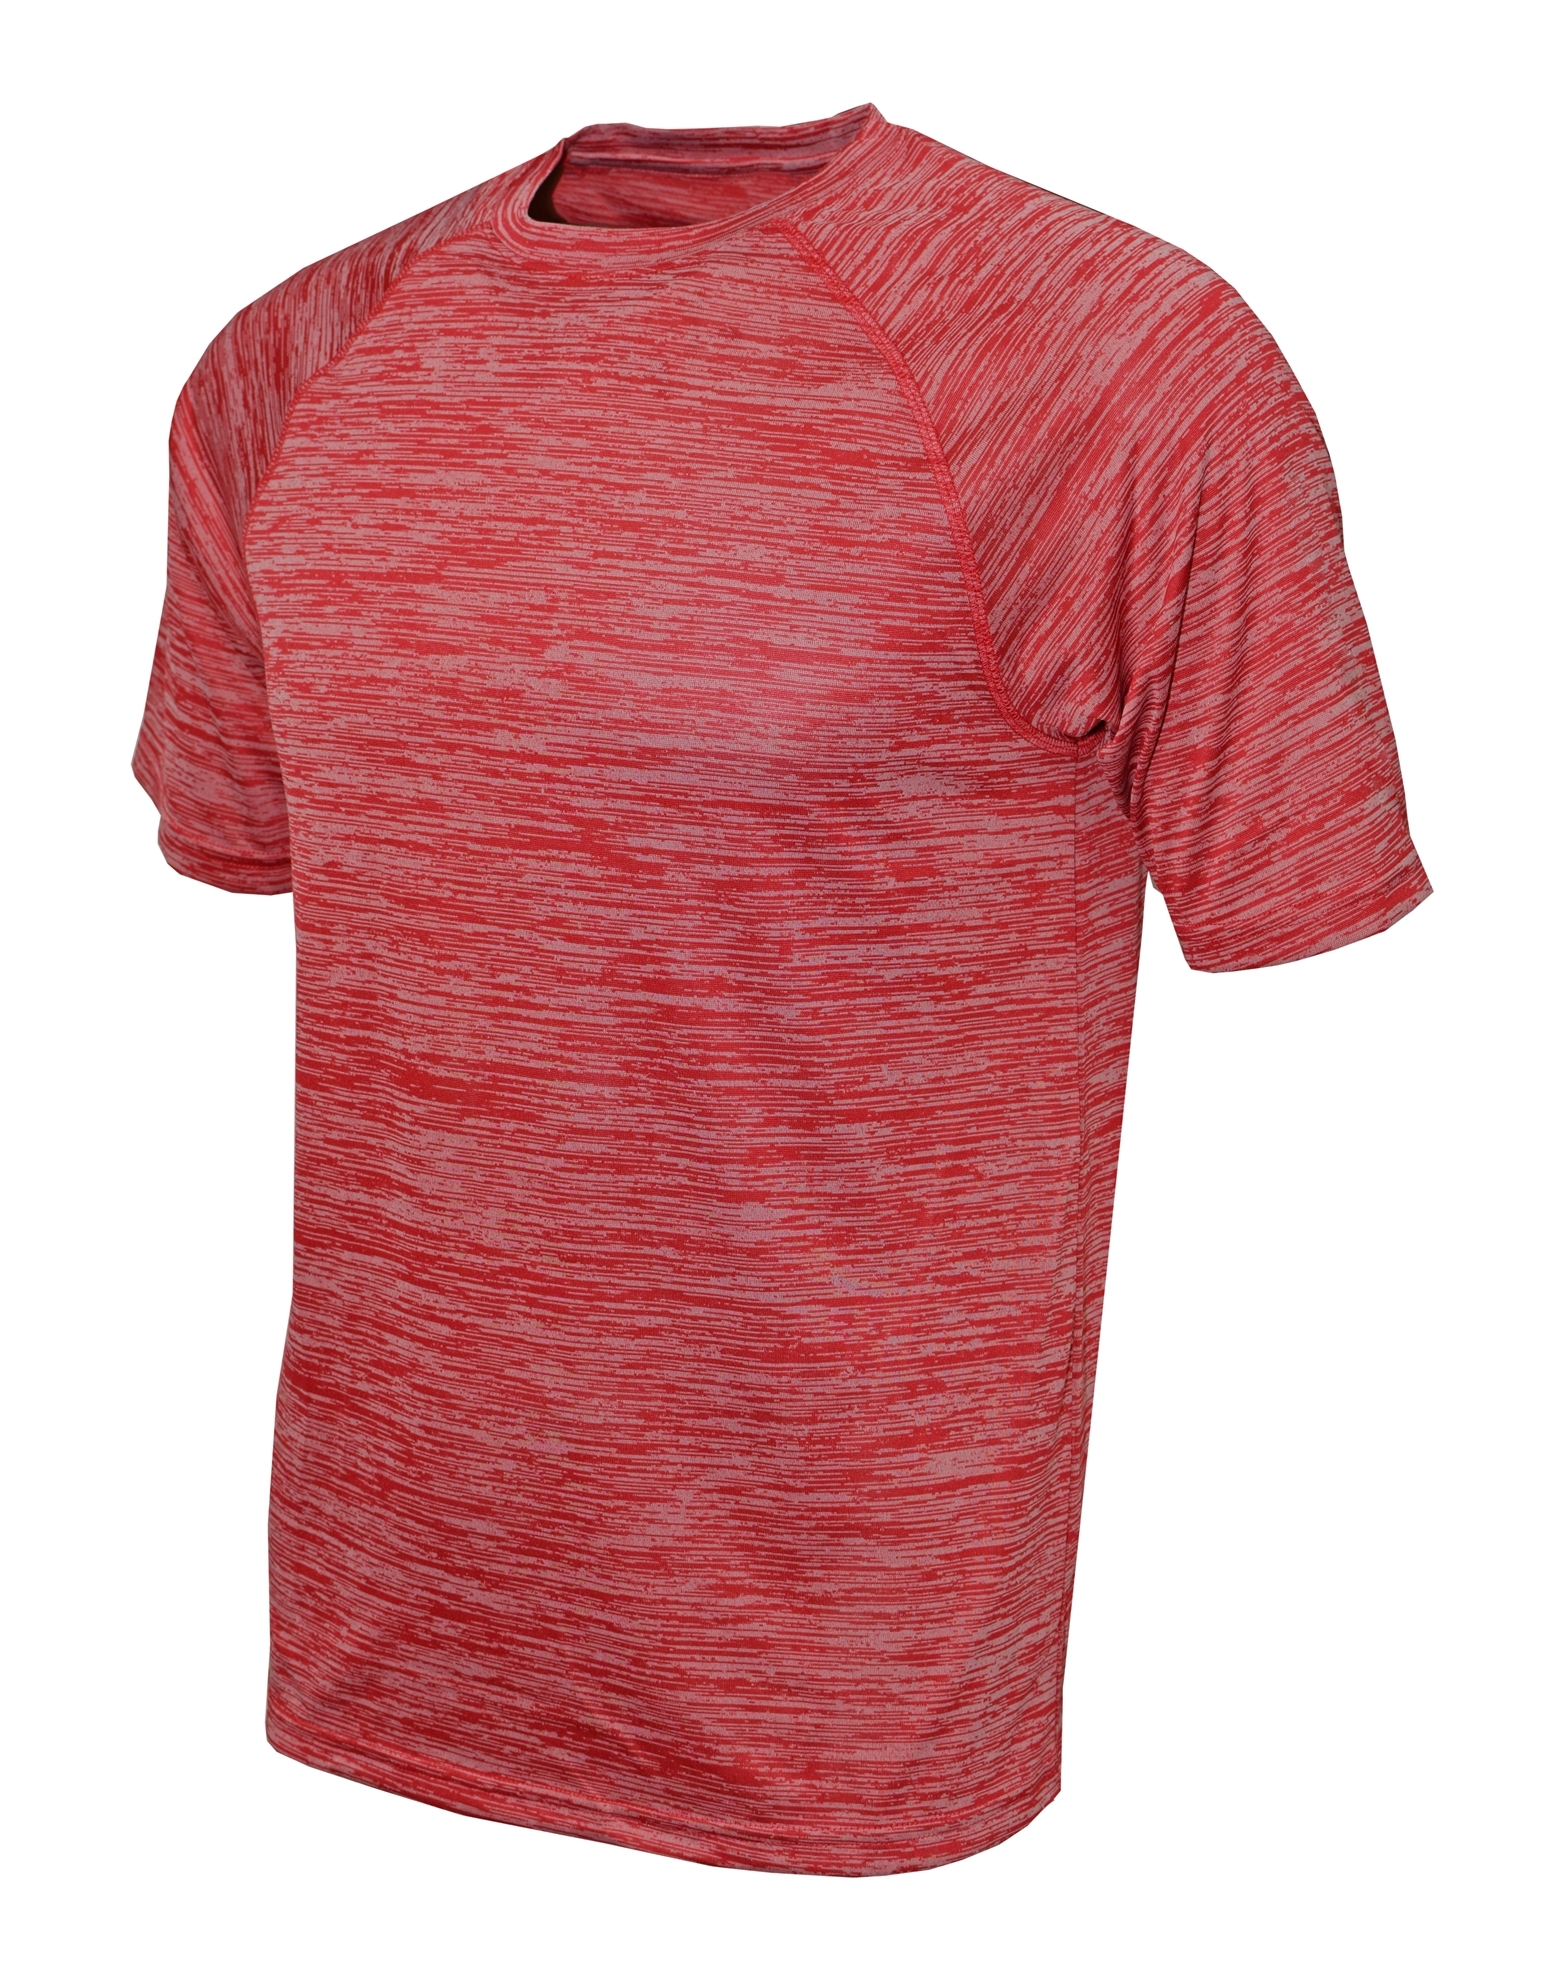 BAW Athletic Wear DT56 - Men's Dry-Tek T-Shirt $8.45 - T-Shirts